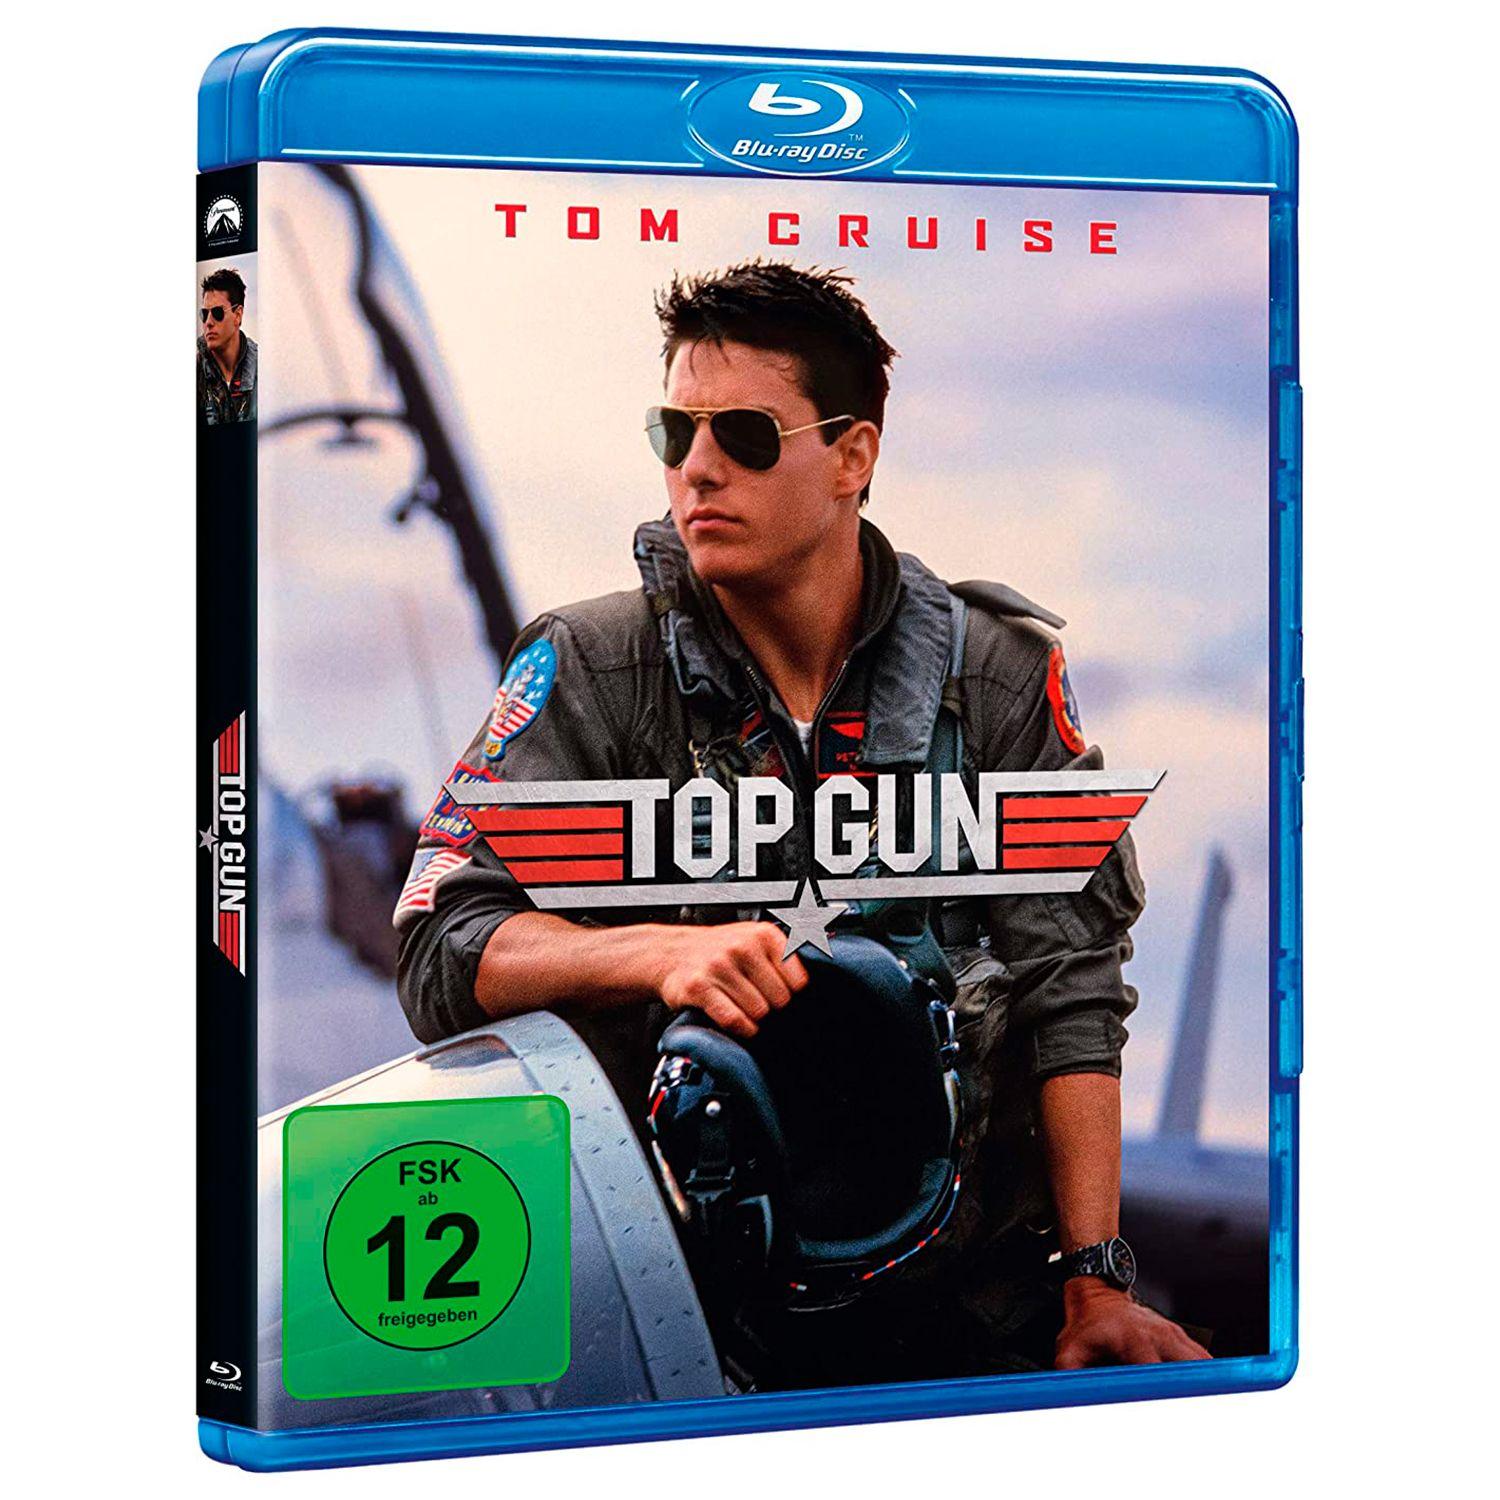 Топ Ган (Лучший стрелок) (Blu-ray)